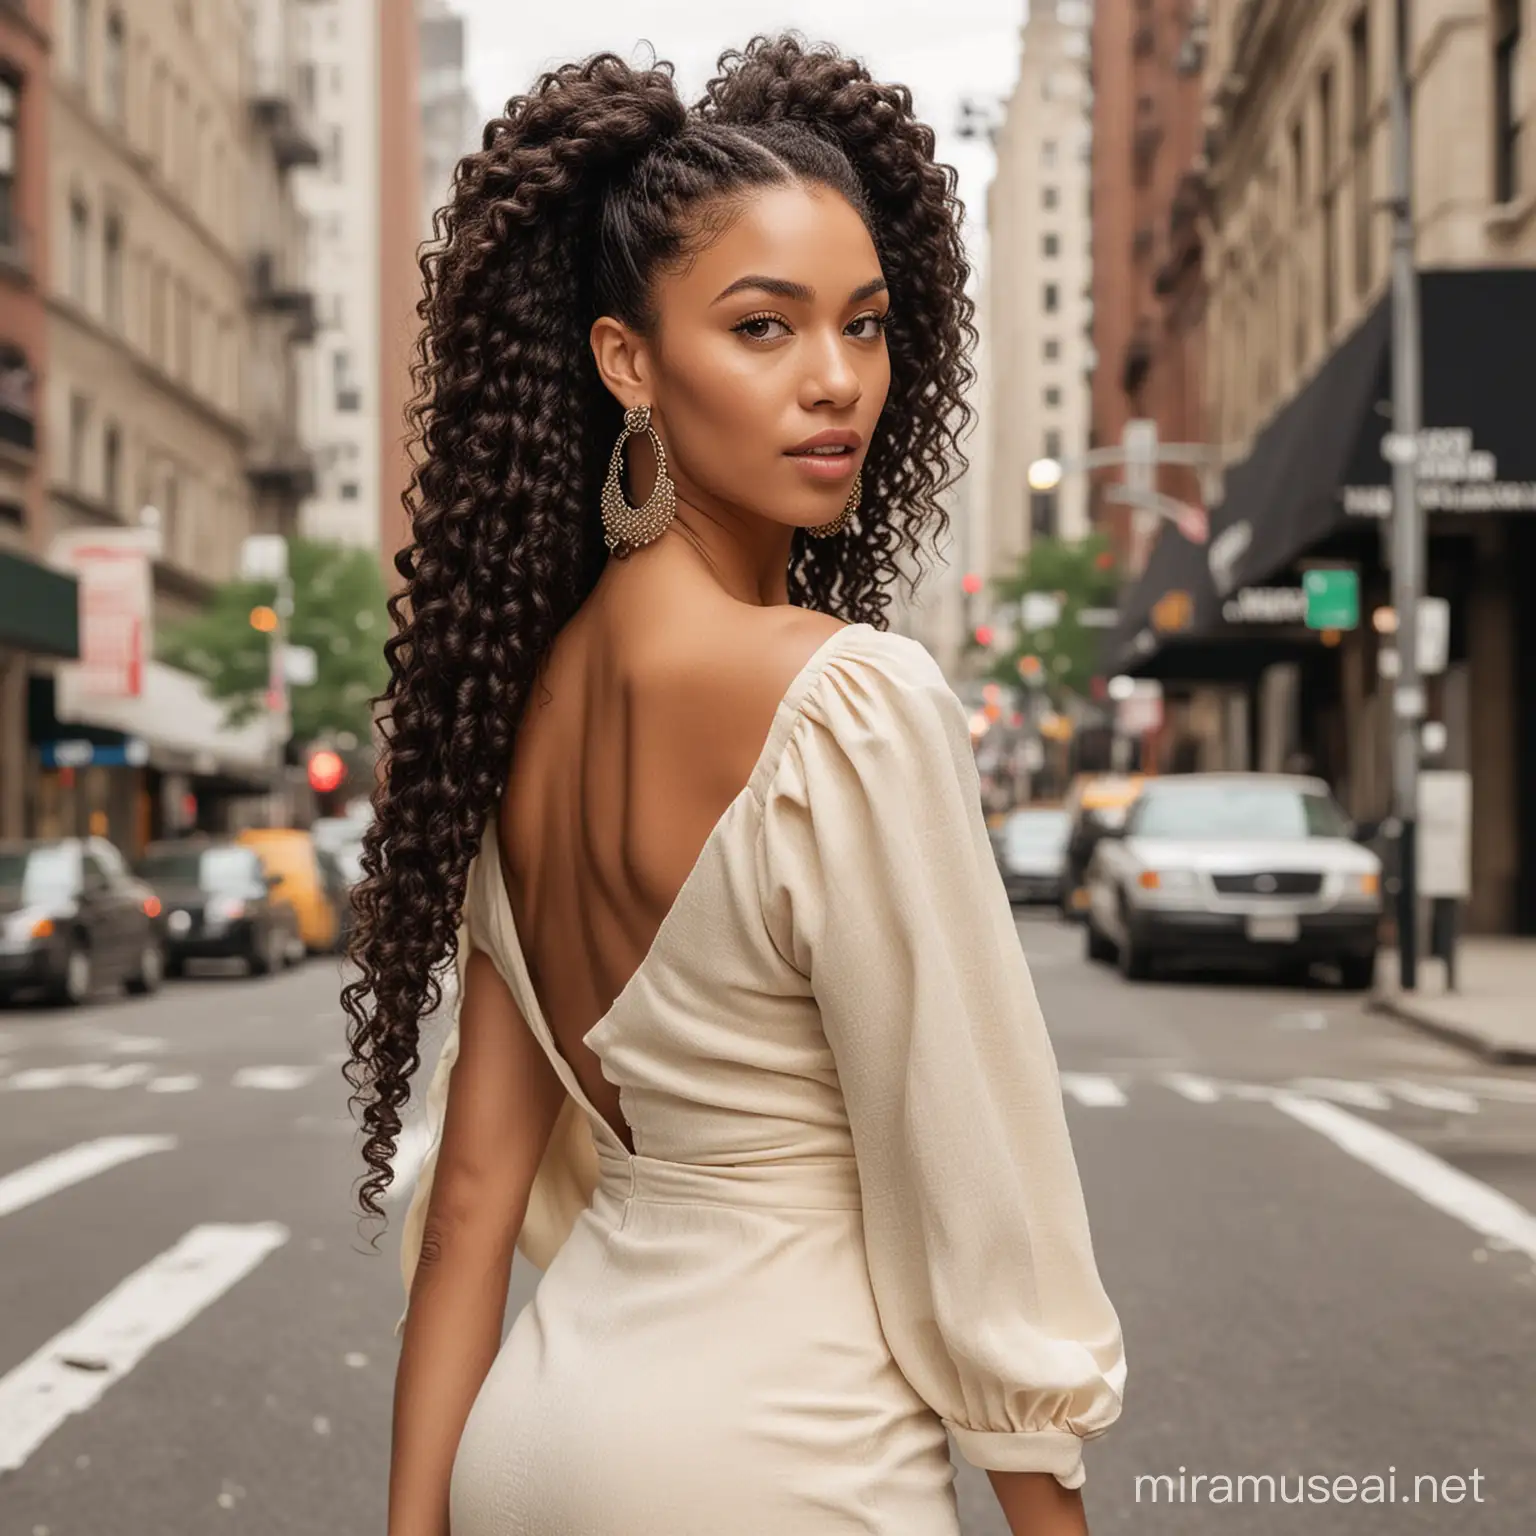 Elegant Mixed Race Model in Cream Chanel Dress on New York Street